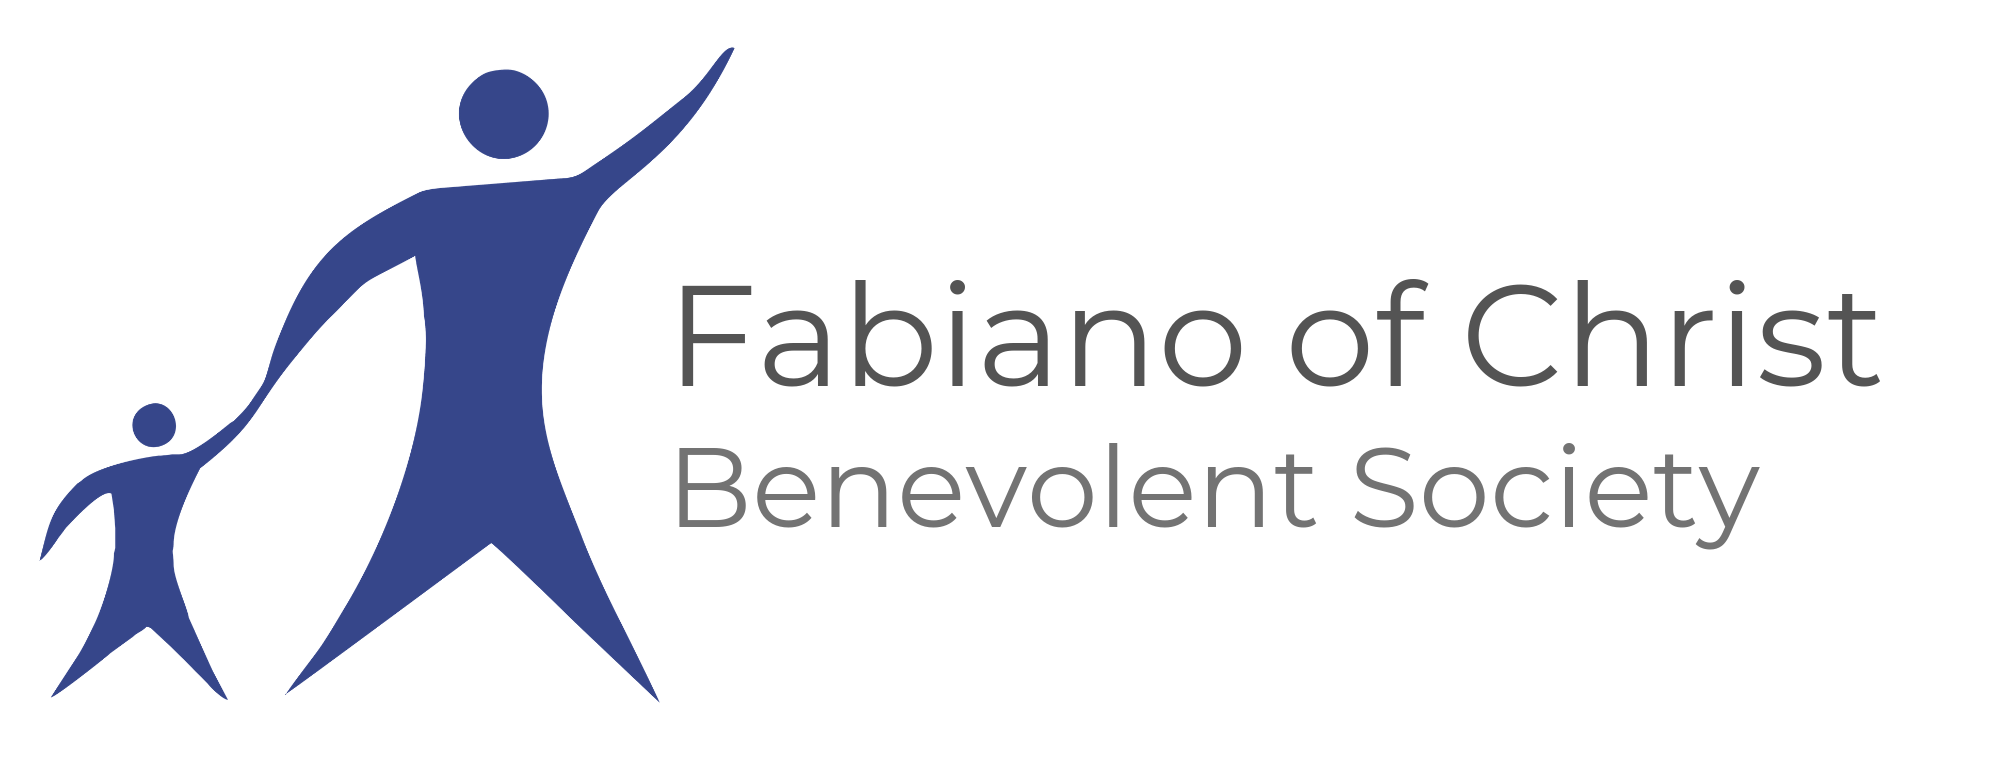 Fabiano of Christ Benevolent Society